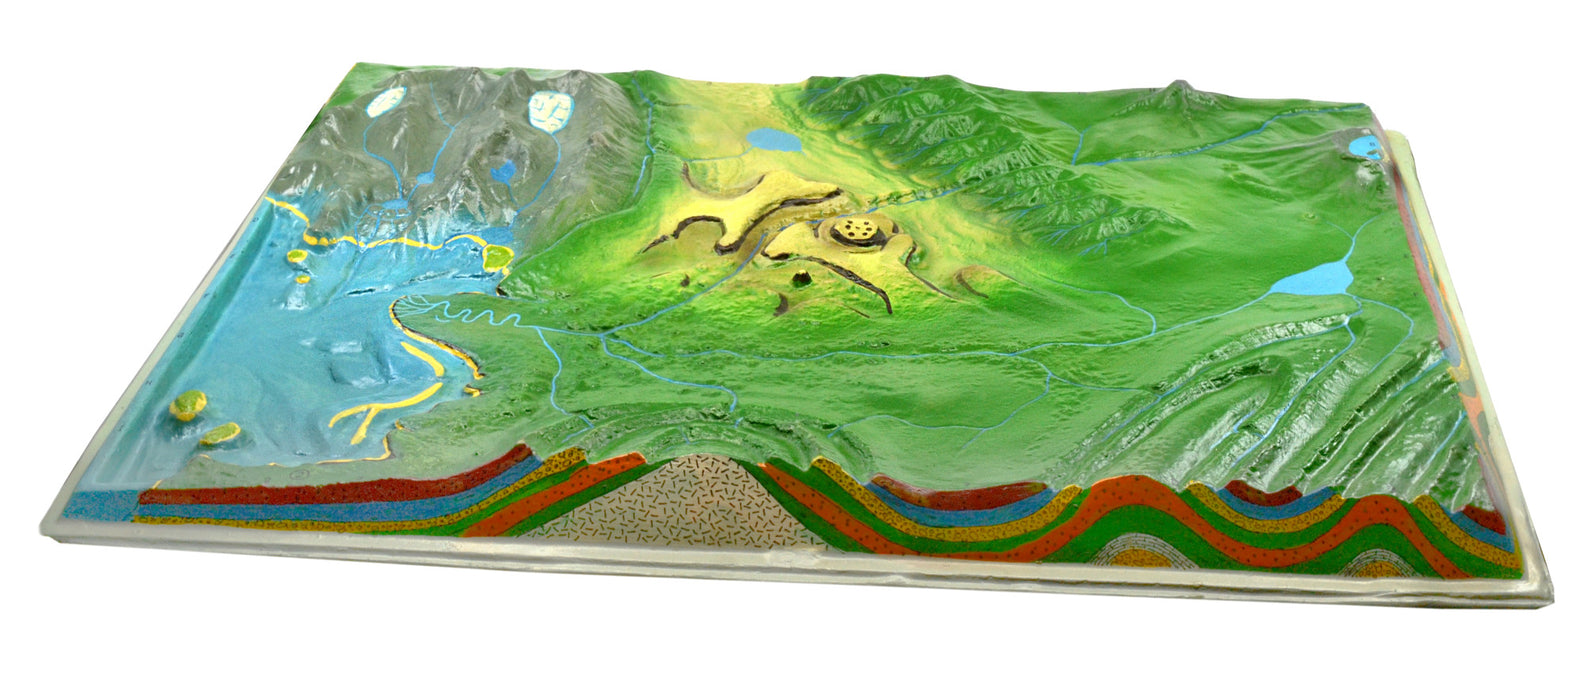 2 Piece Comparative Terrain Landform Models, 23.5 Inch